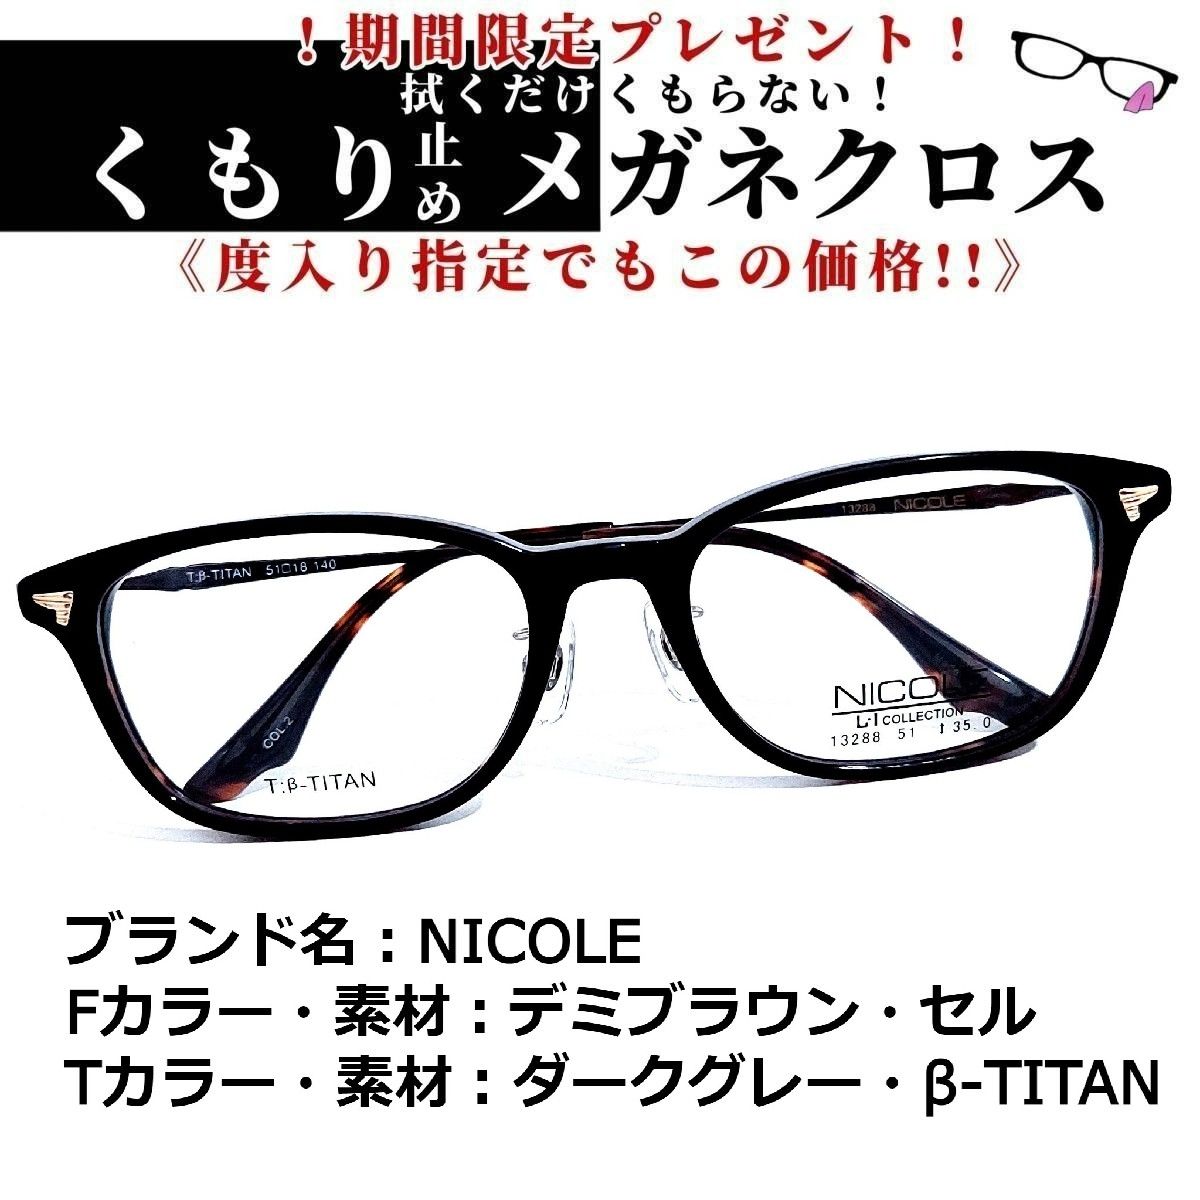 No.1609+メガネ NICOLE【度数入り込み価格】 - スッキリ生活専門店